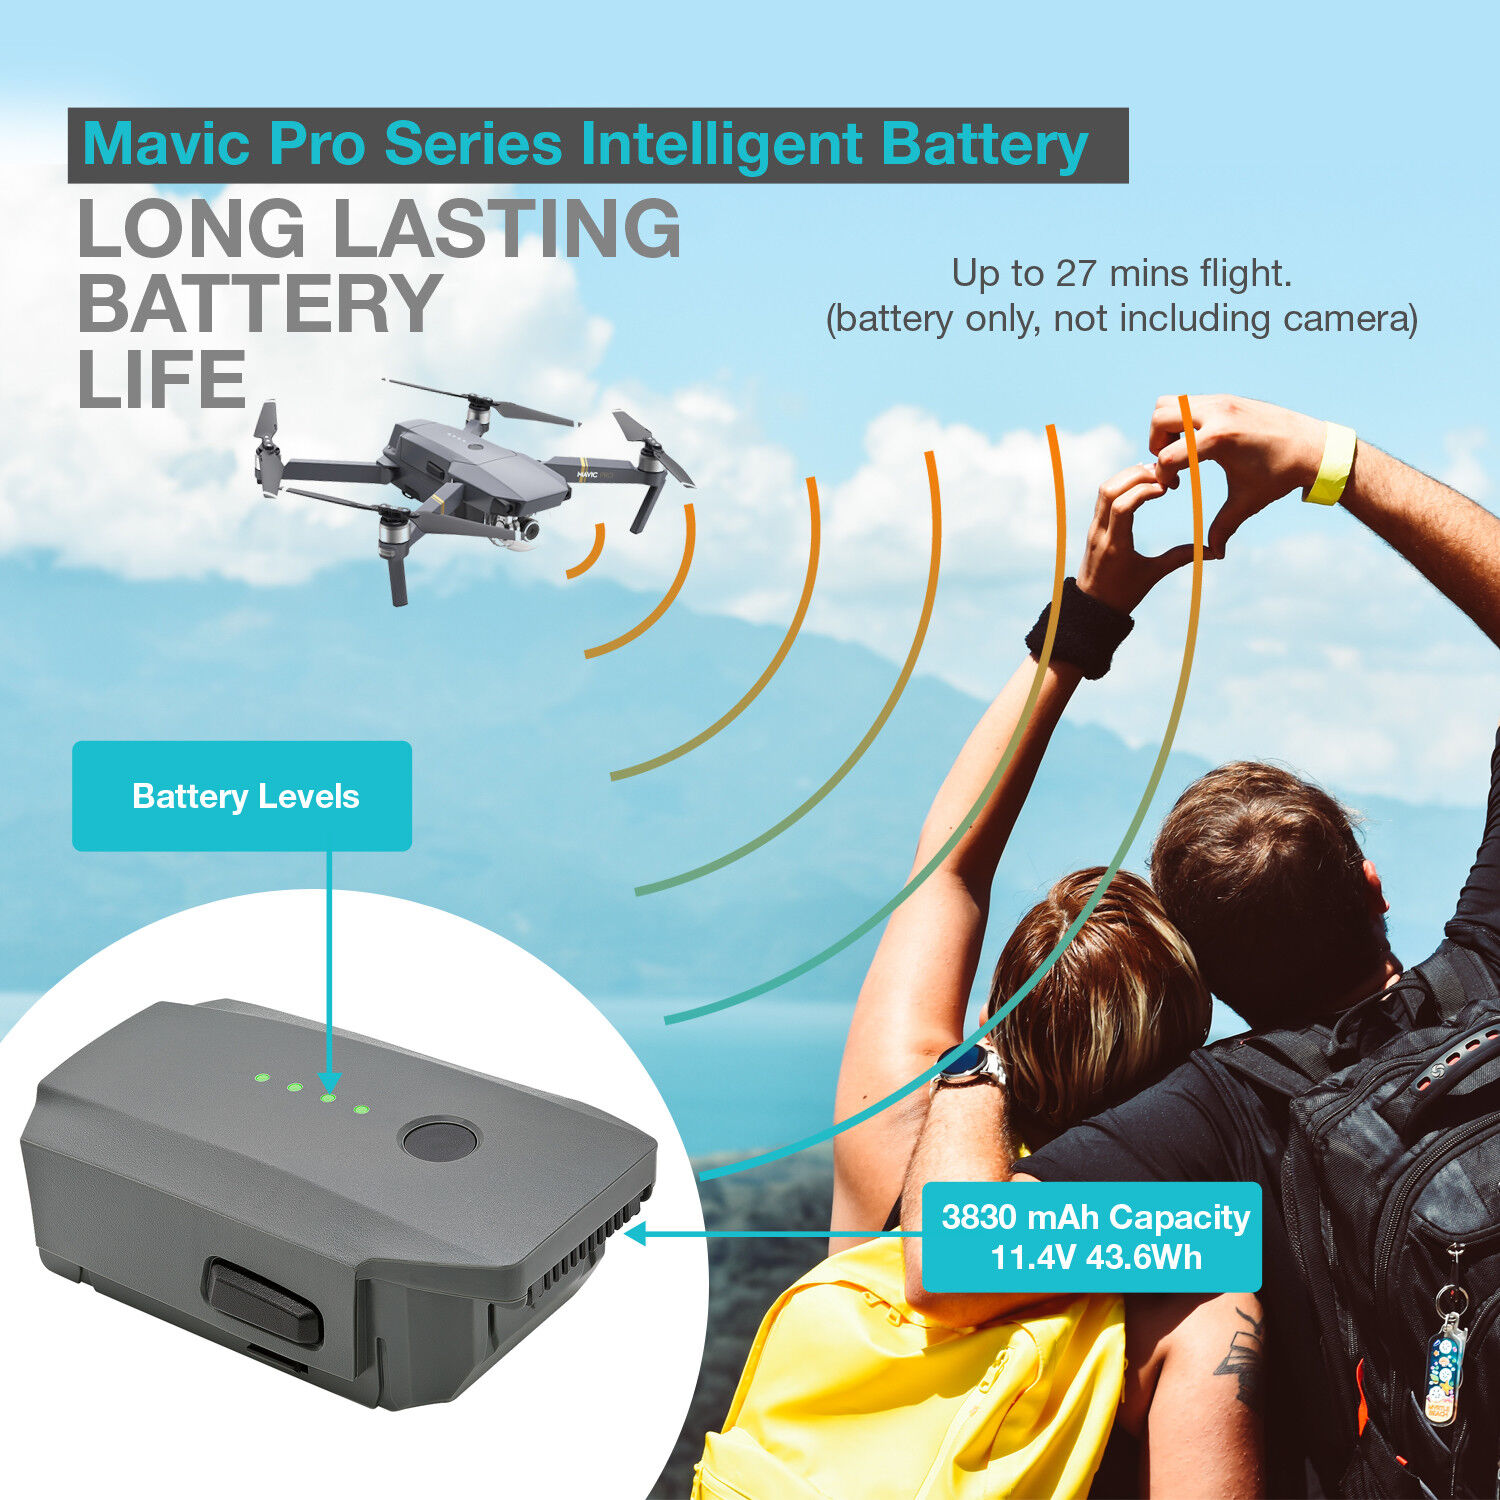 2 pcs 11.4V 3830mAh Intelligent Flight LiPo Battery For DJI Mavic Pro   Battnation (NOT OEM) Does Not Apply - фотография #8